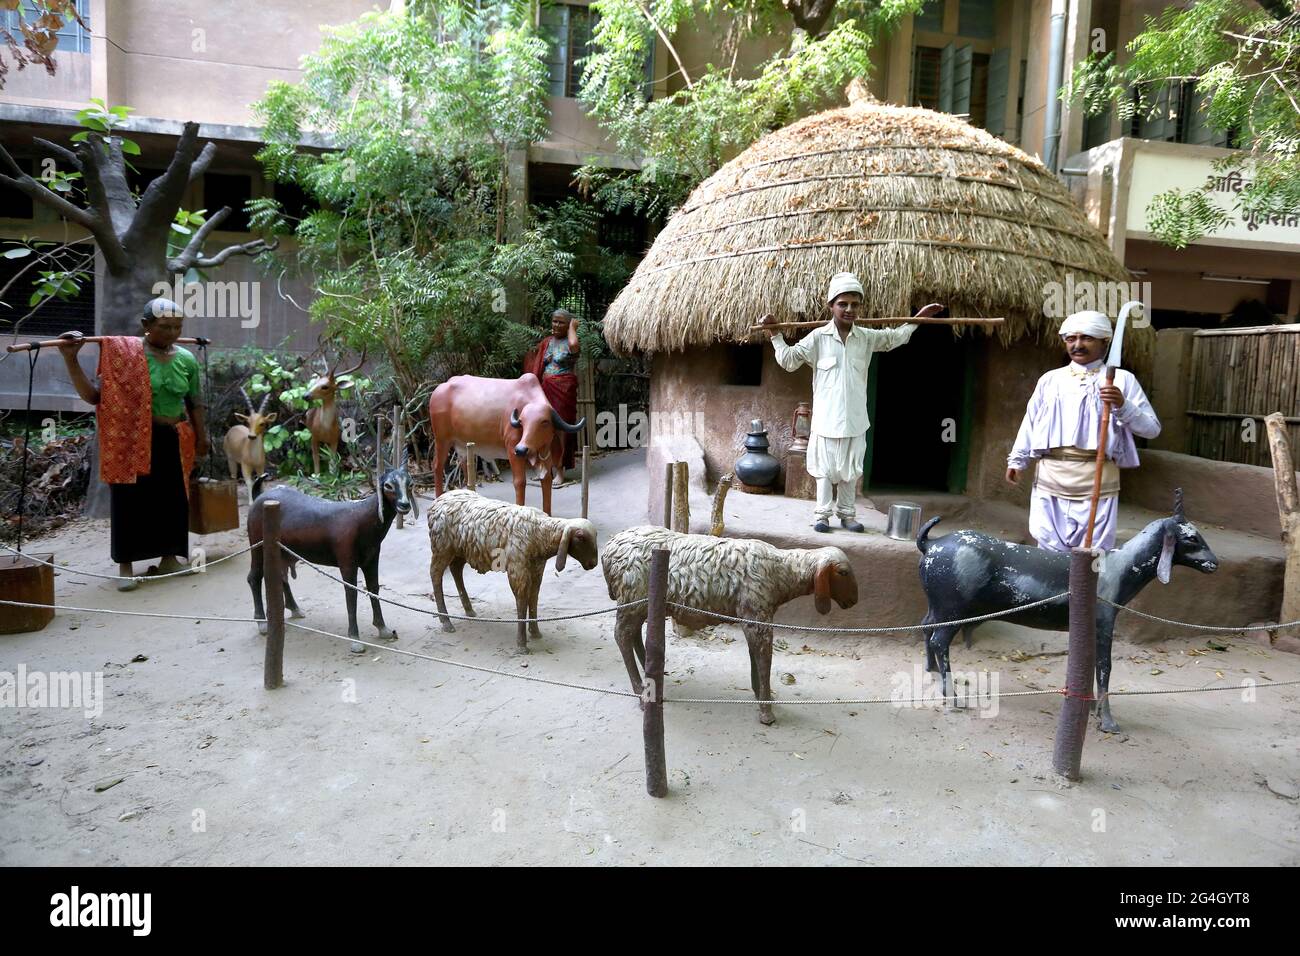 Ahmedabad Tribal Museum - RABARI TRIBE traditional mud house display showing their tribal lifestyle. Gujarat, India Stock Photo